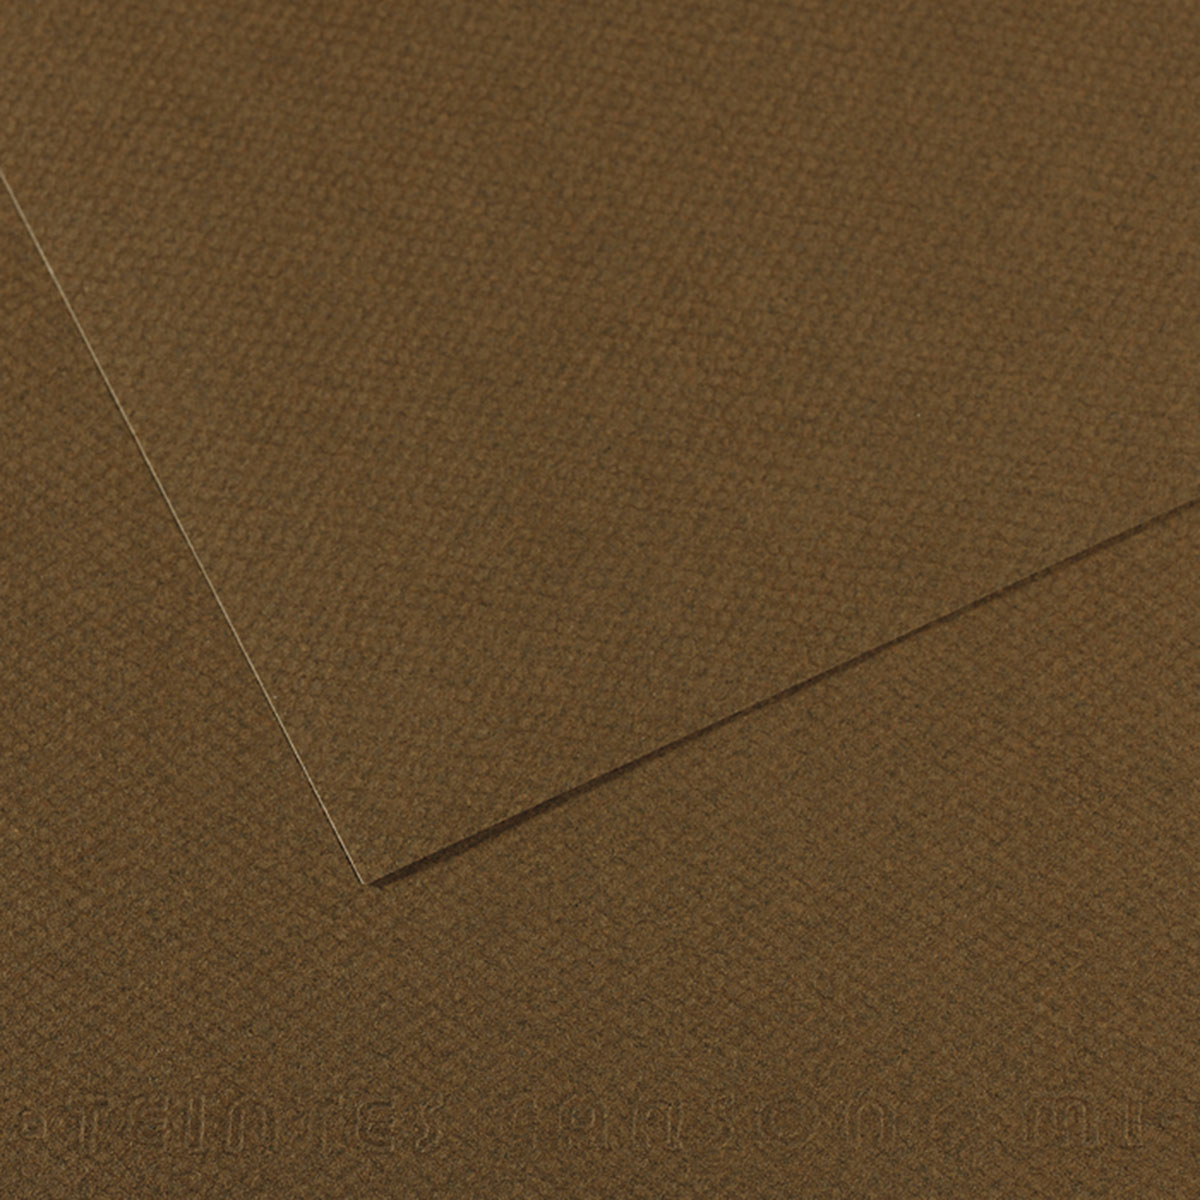 Canson Mi-Teintes Drawing Paper - 19 x 25, Sage Green, Single Sheet